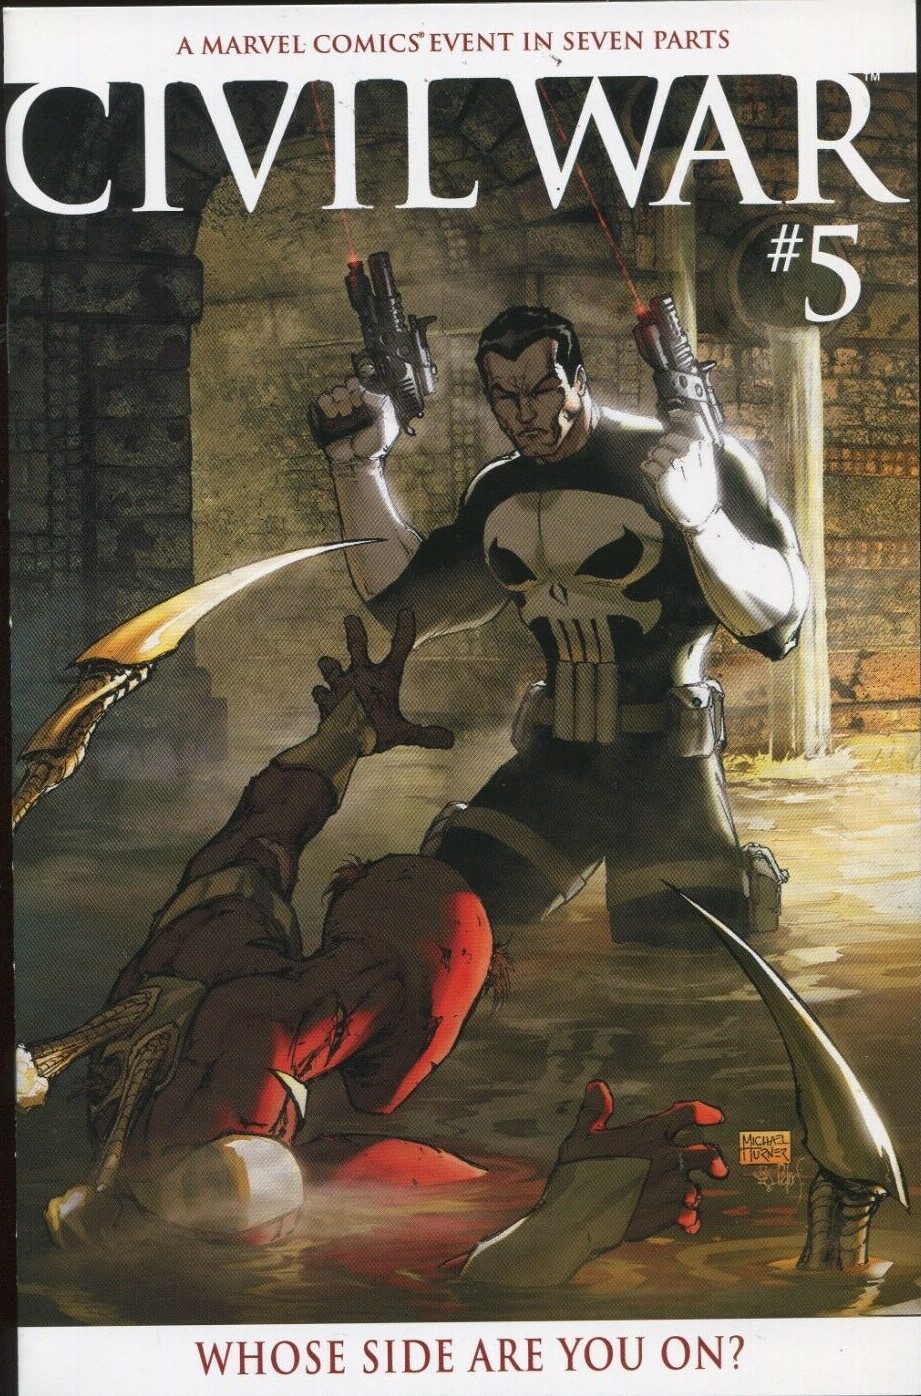 Civil War #5 (2006) Turner Variant